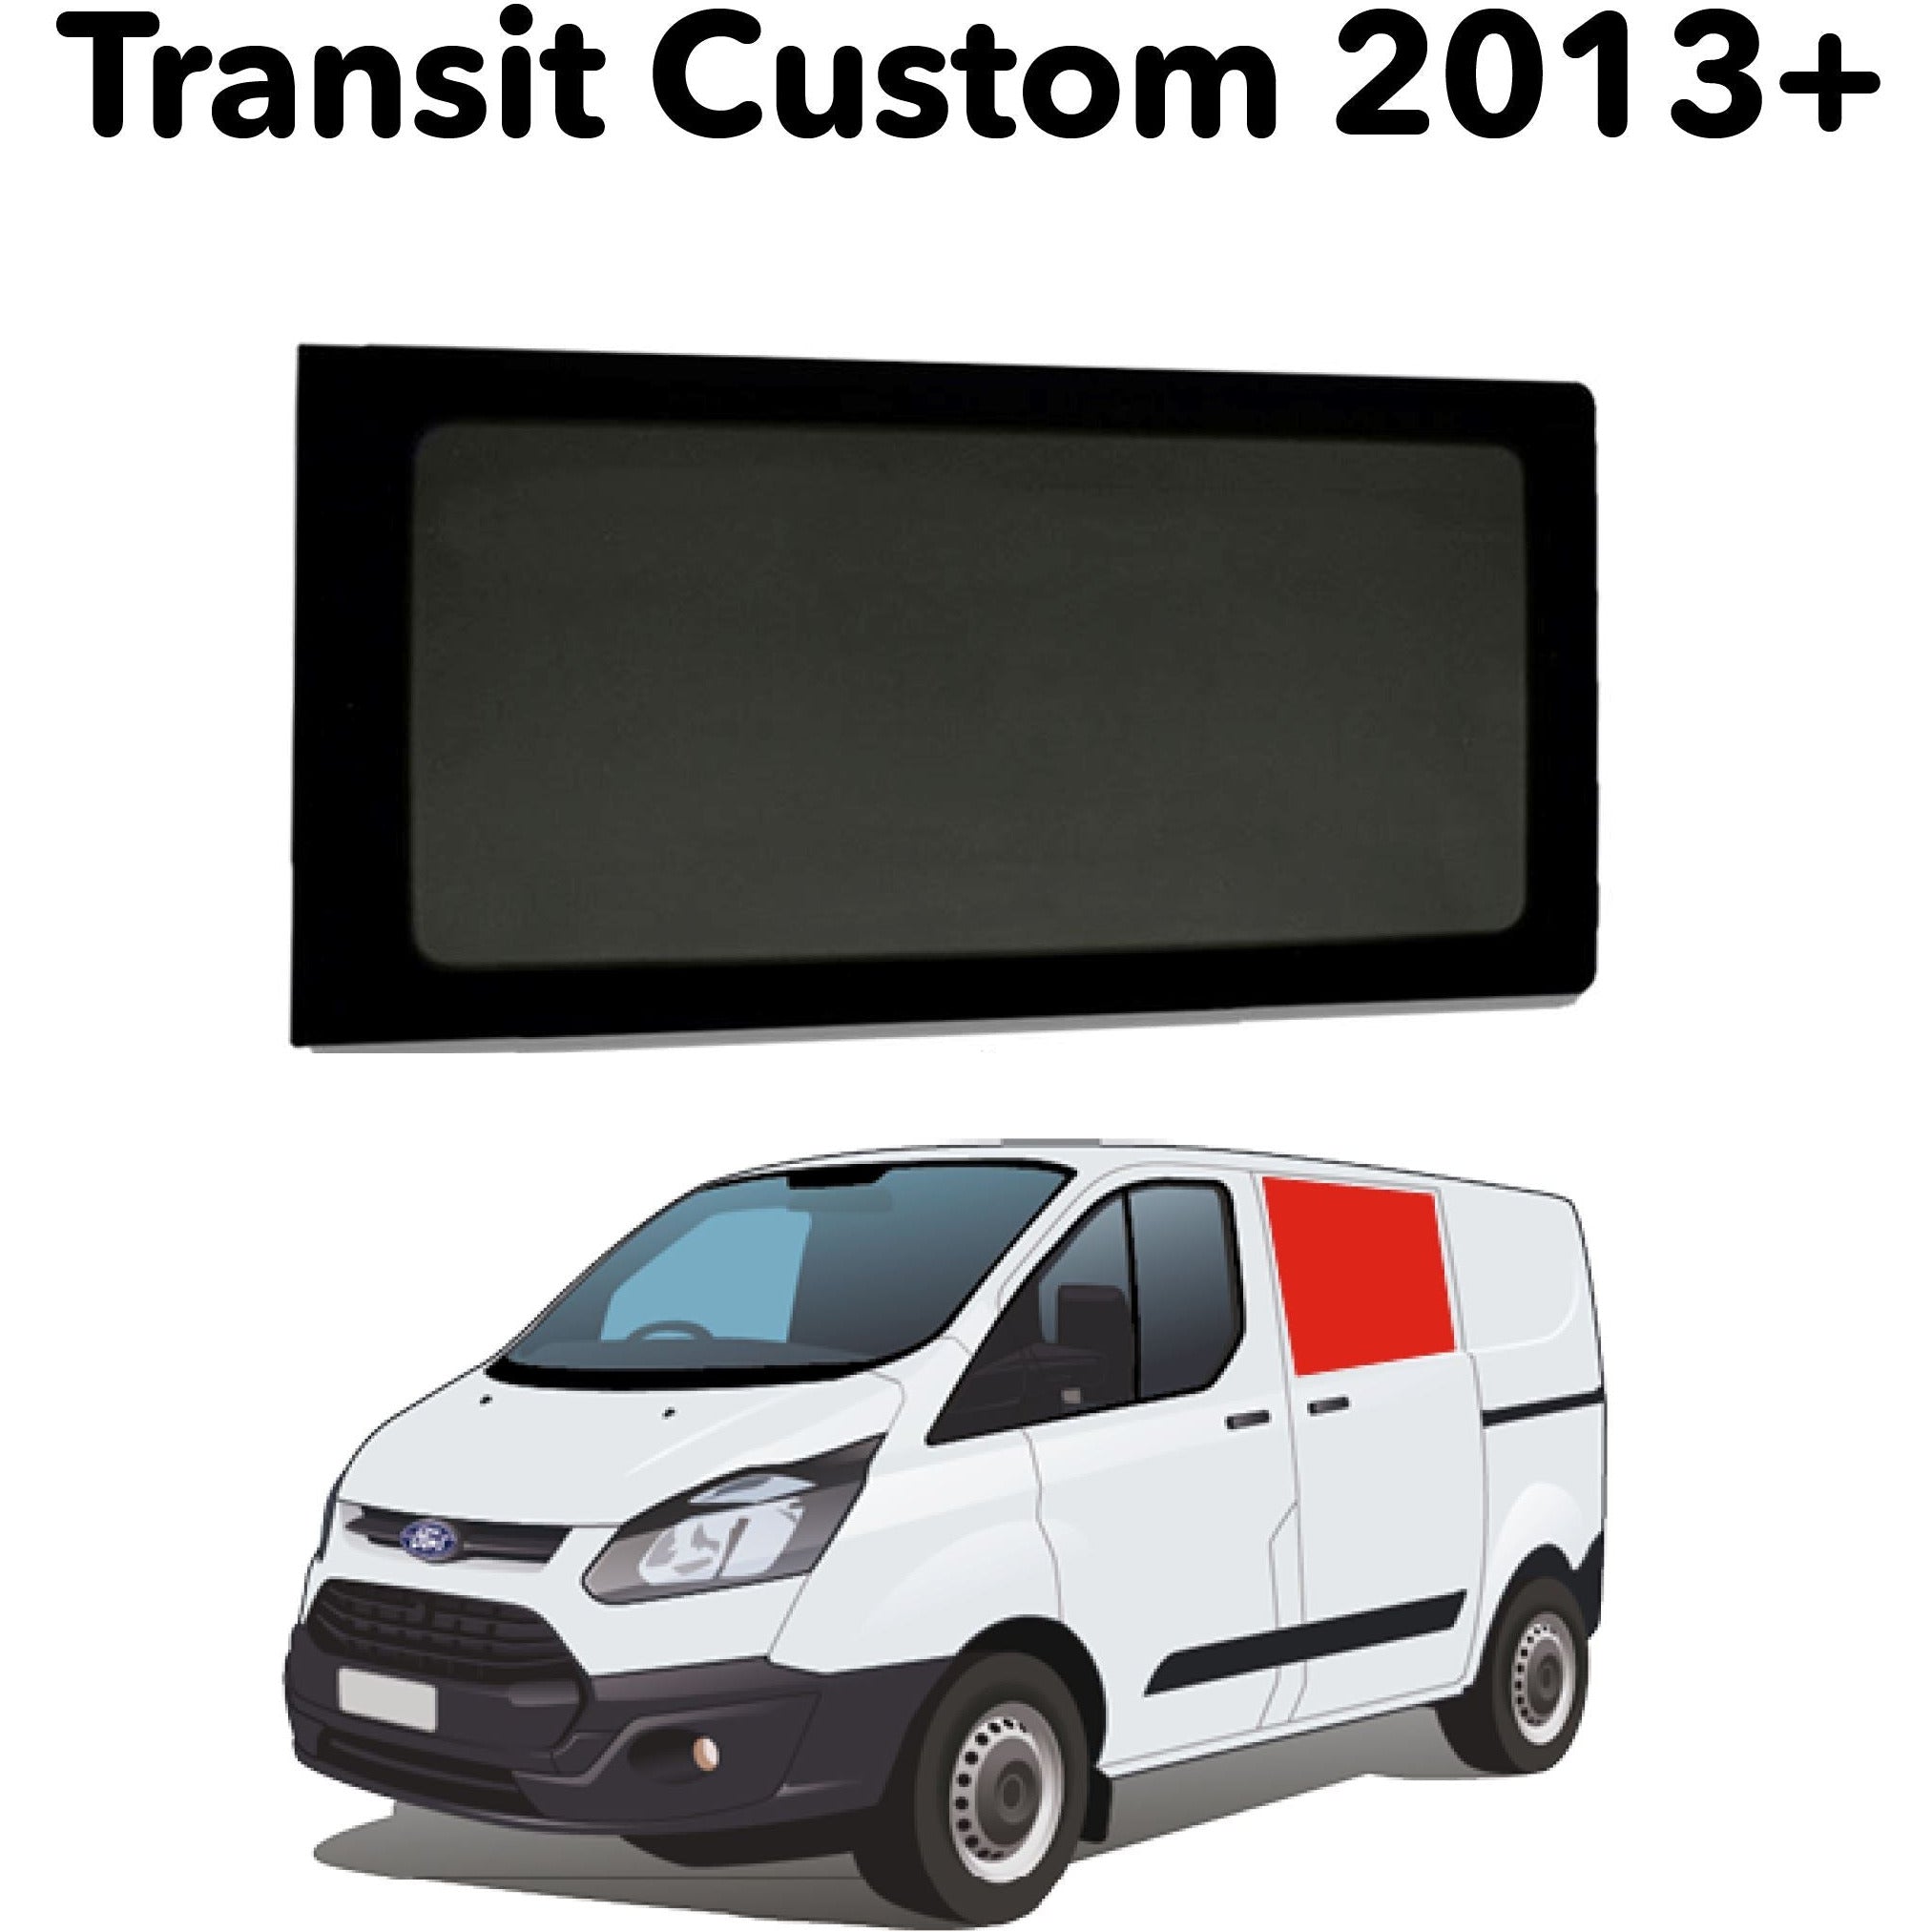 Left Fixed Window Ford Transit Custom 2013+ - Sliding Door Camper Glass by Kiravans 